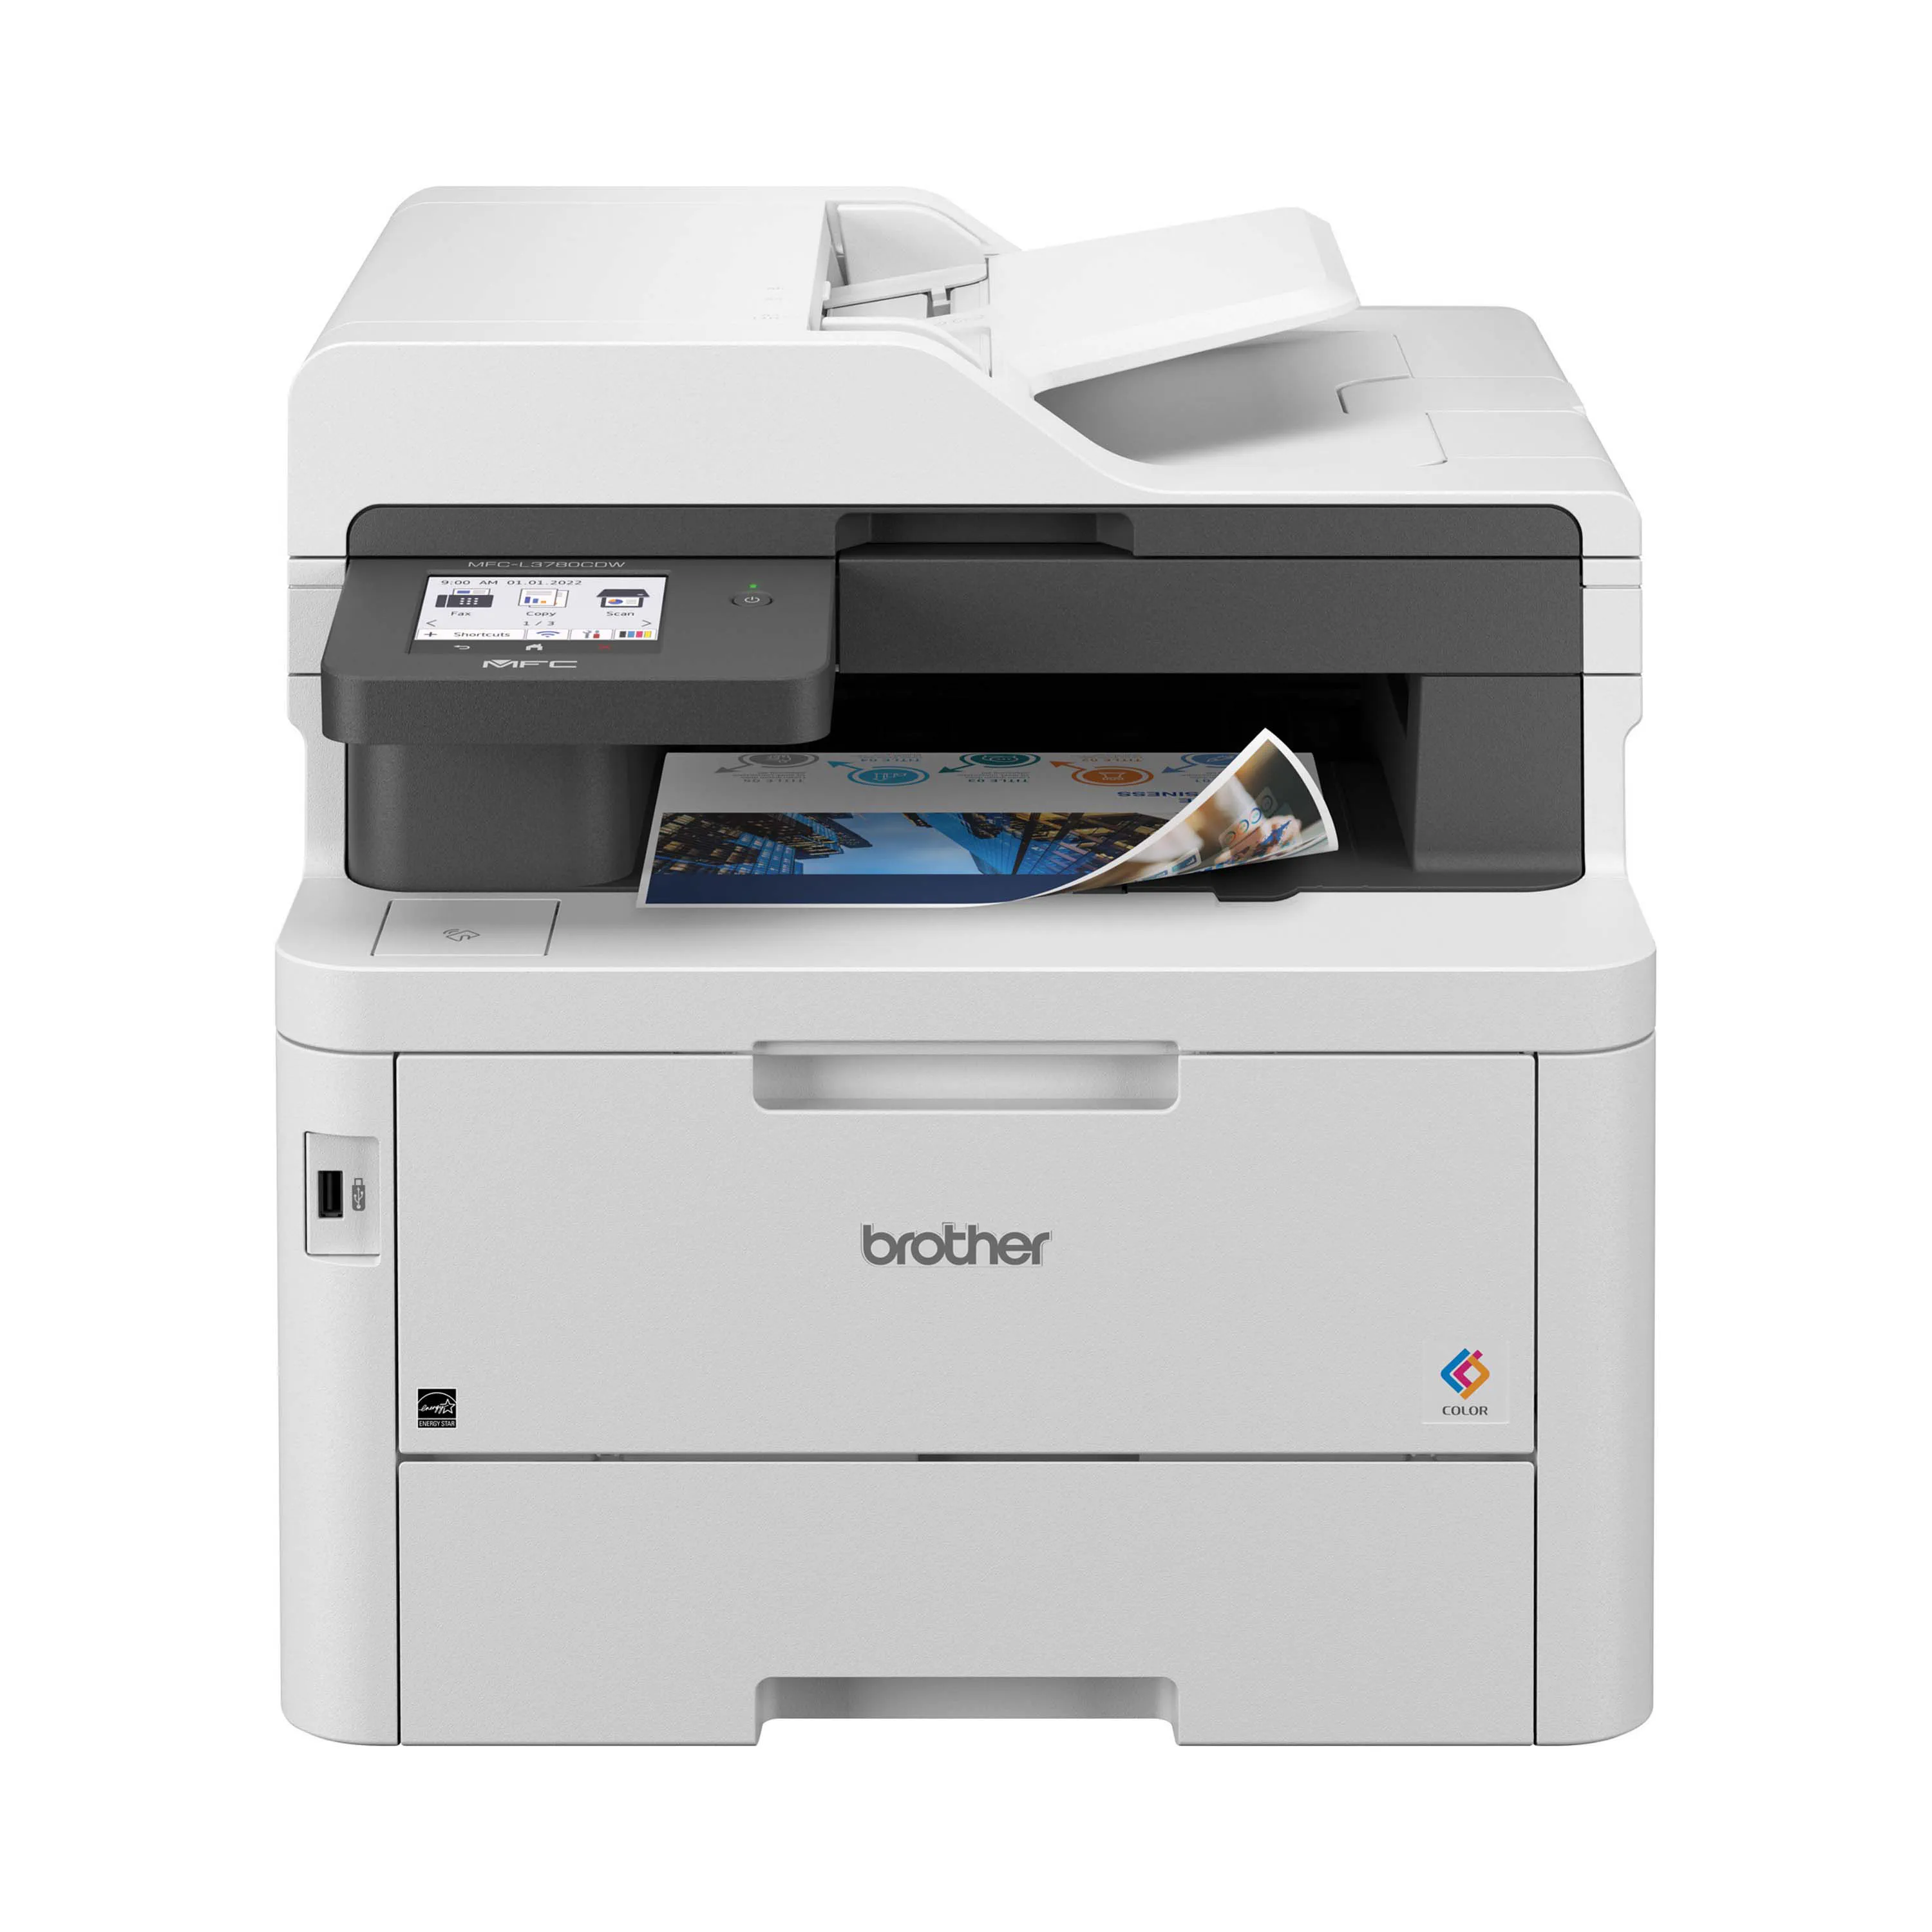 Brother MFC-L8690CDW imprimante multifonction laser couleur 